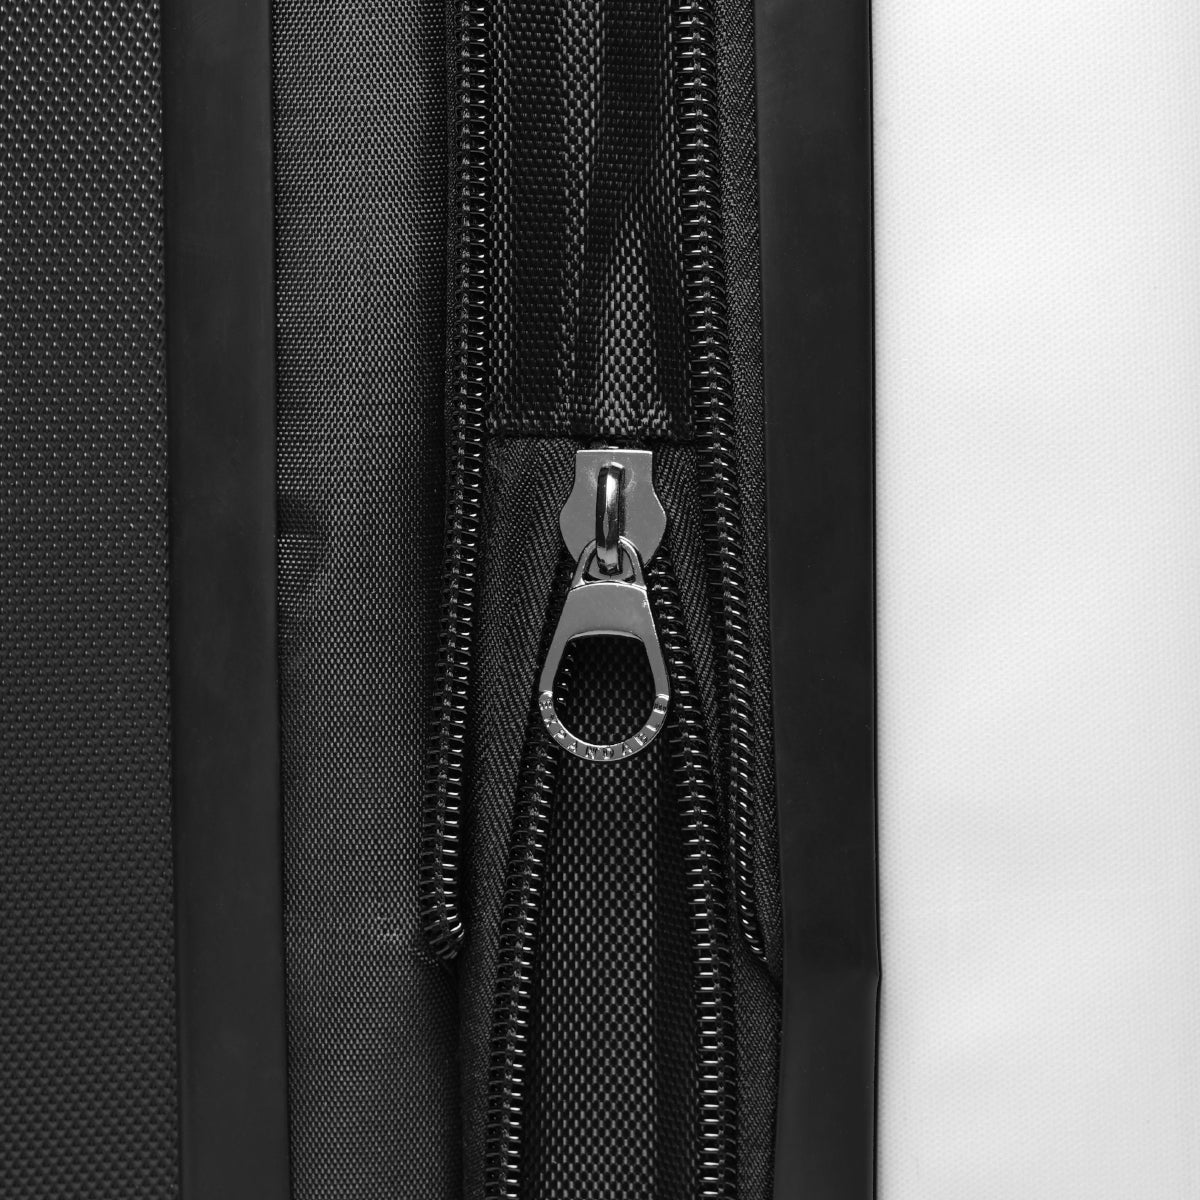 Getrott Funkadelic Maggot Brain Black Cabin Suitcase Inner Pockets Extended Storage Adjustable Telescopic Handle Inner Pockets Double wheeled Polycarbonate Hard-shell Built-in Lock